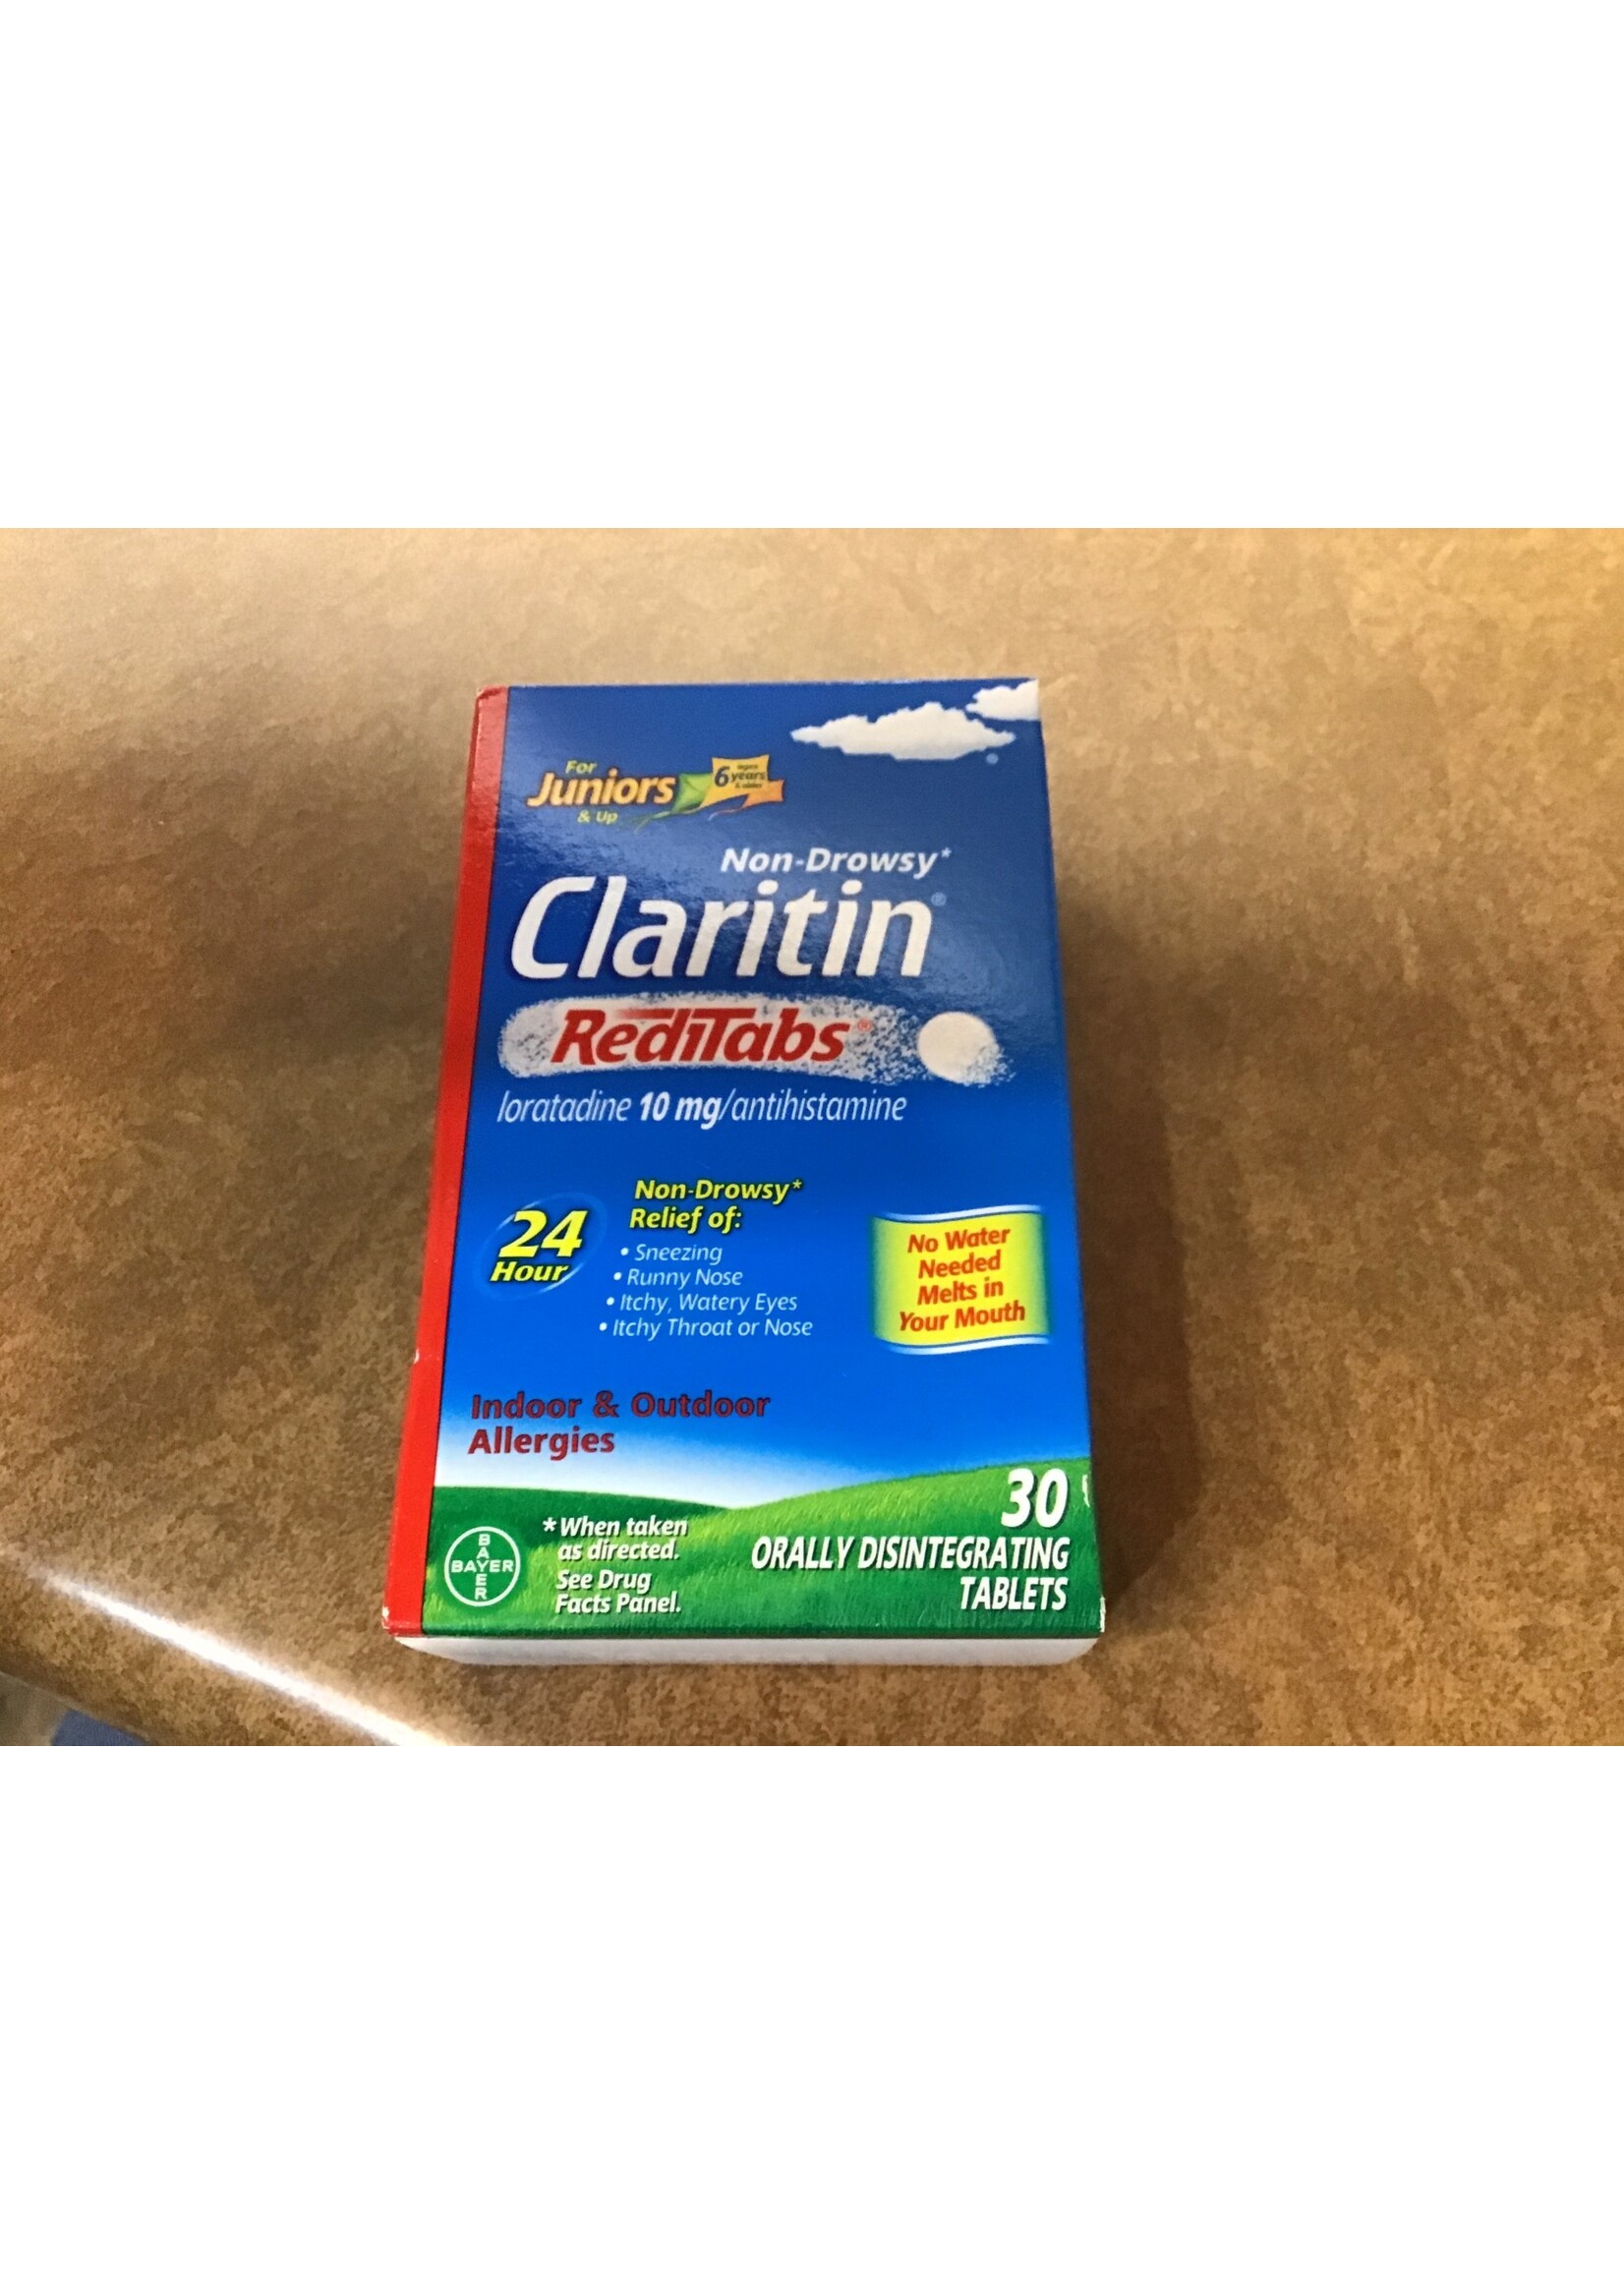 Claritin Children's Loratadine Allergy Relief 24 Hour Non-Drowsy RediTab Dissolving Tablets - 30ct